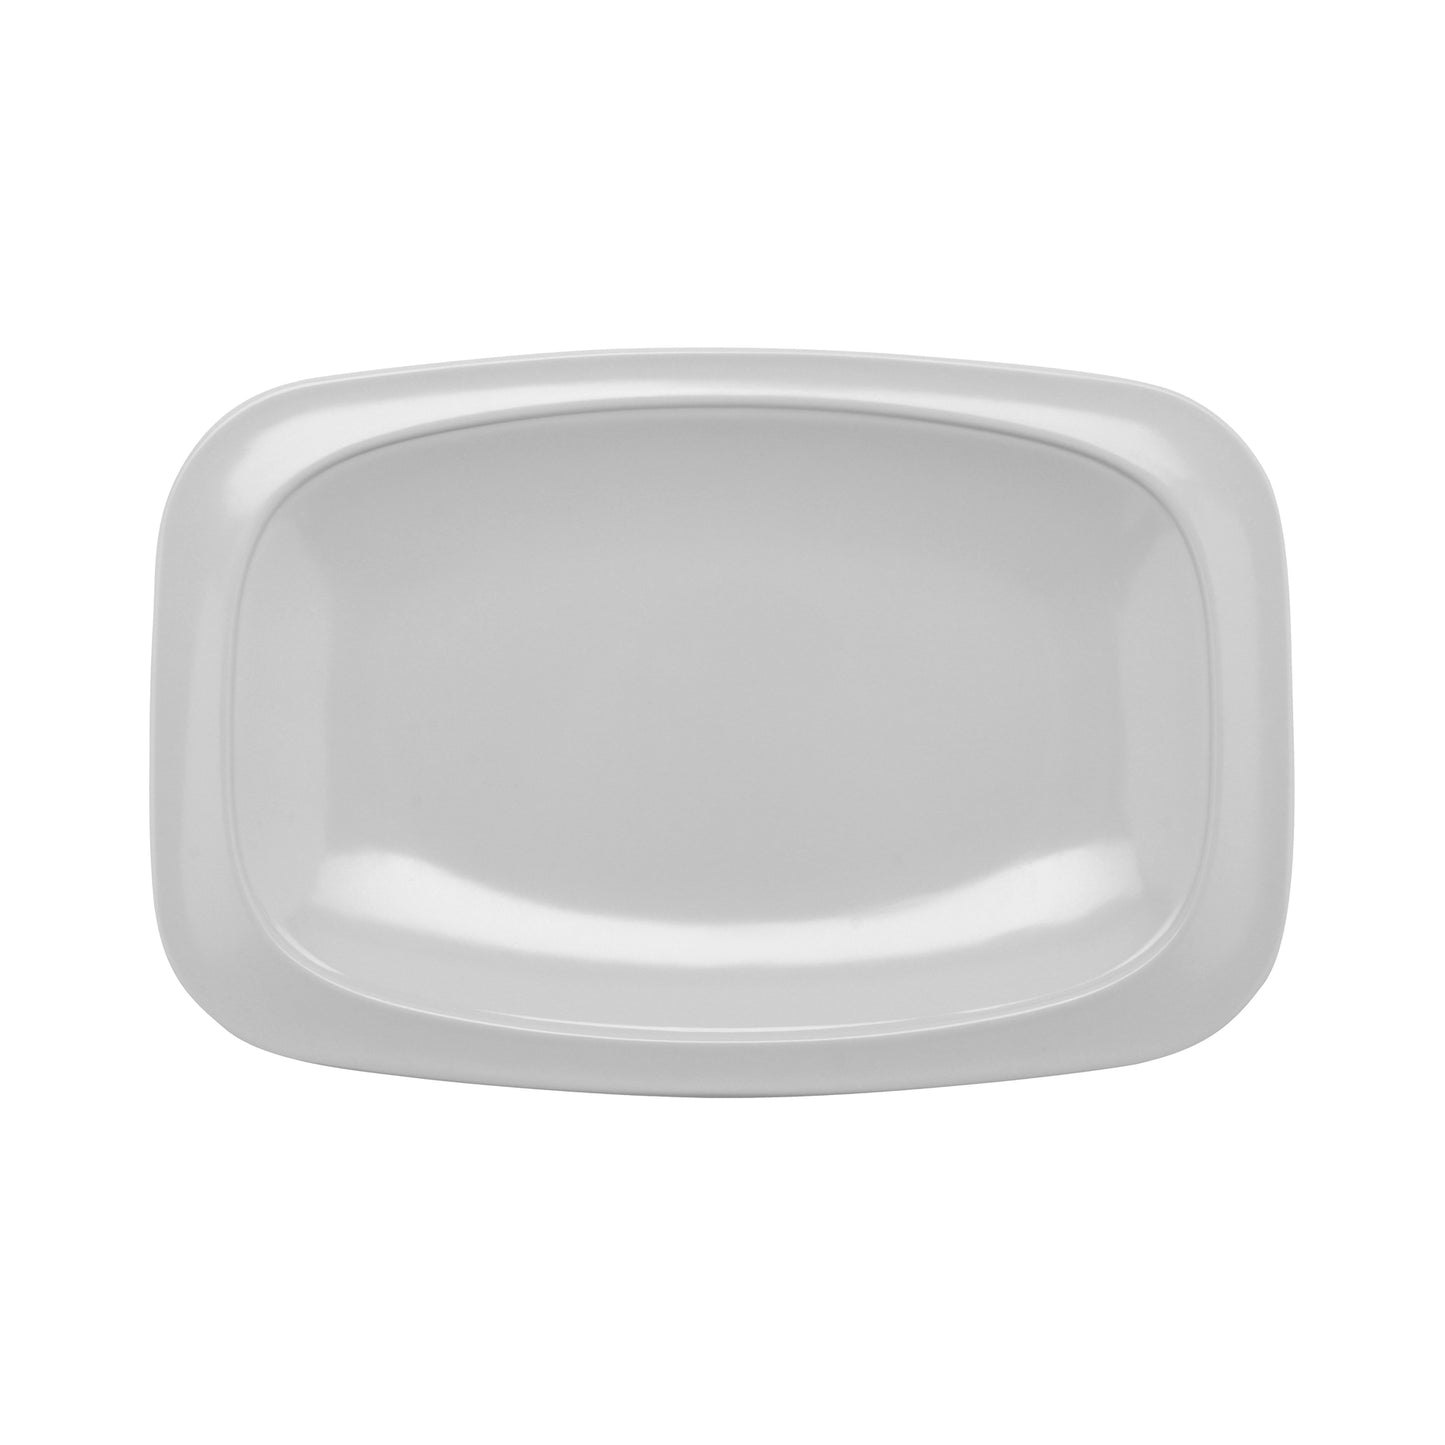 12.5" x 8.25" Oval Platter w/Round Corners (Set of 4 ea.)